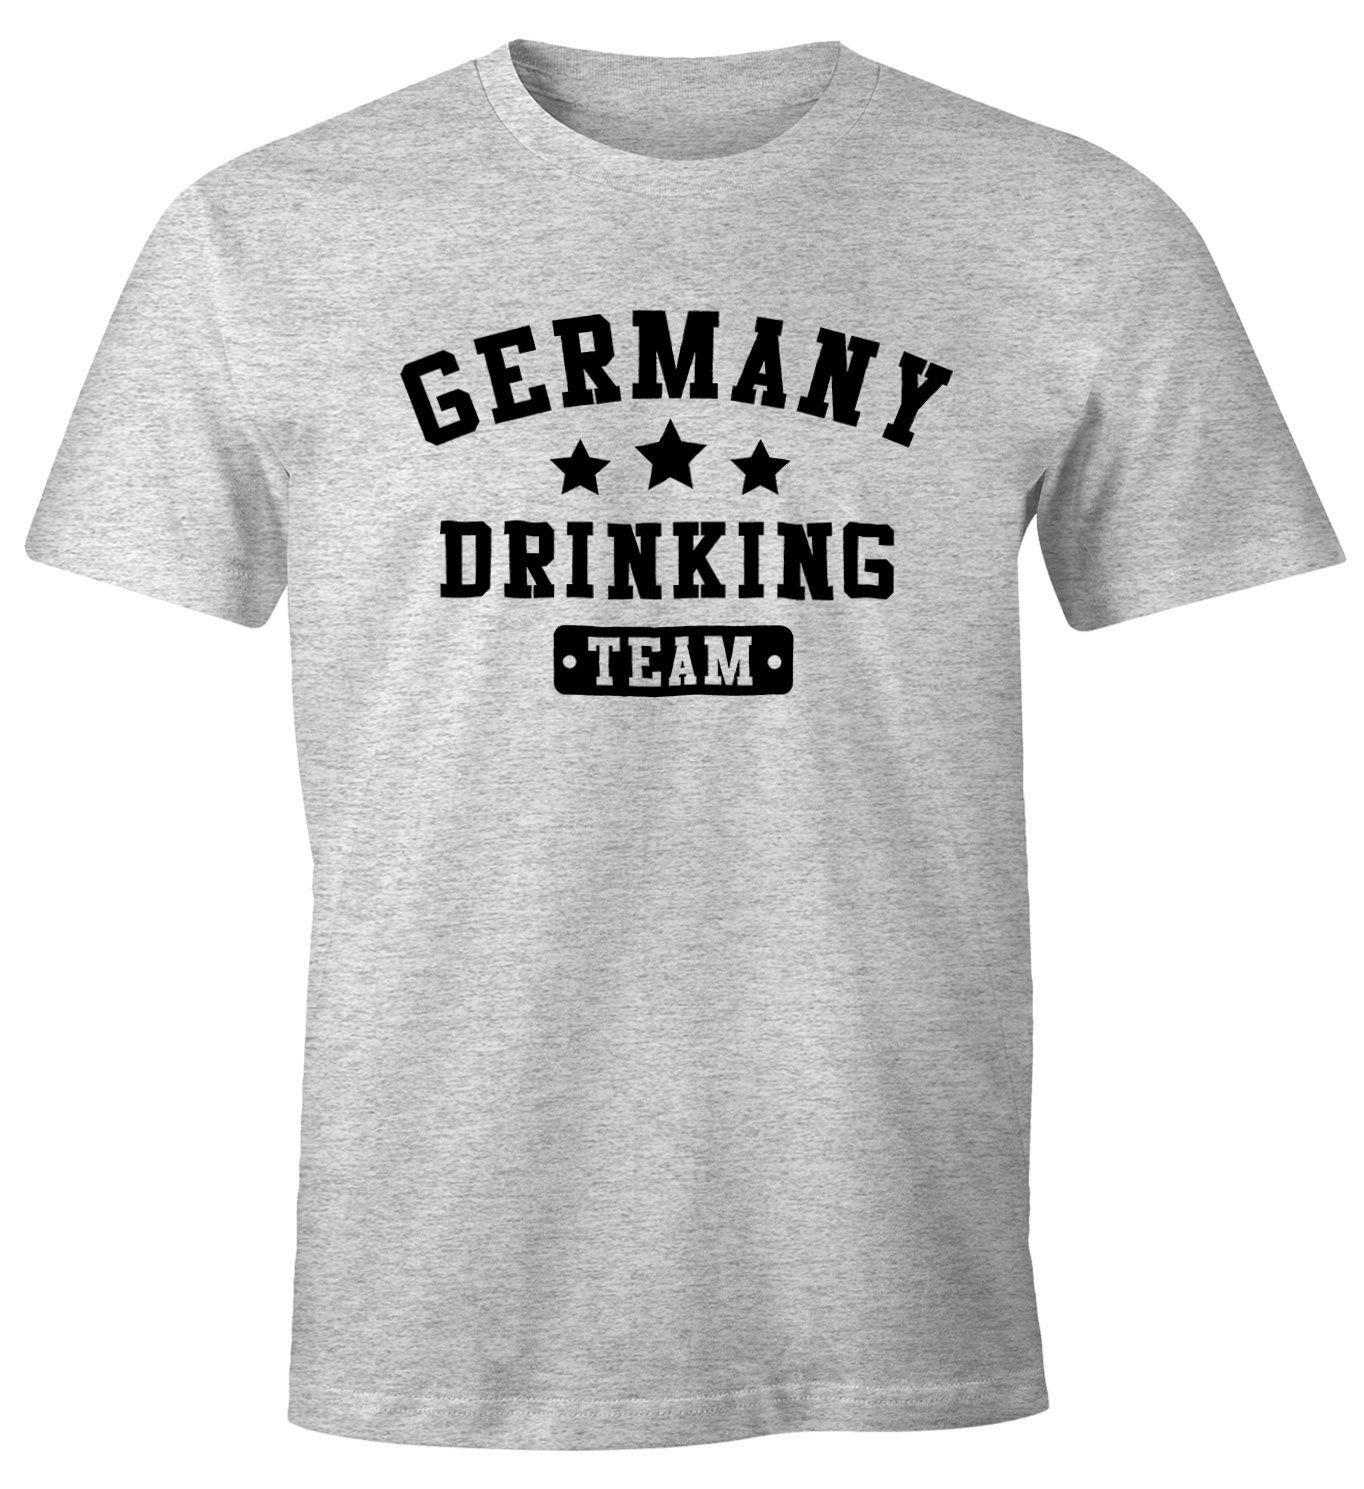 MoonWorks Print-Shirt Herren T-Shirt Germany Drinking Team Bier Fun-Shirt Moonworks® mit Print grau